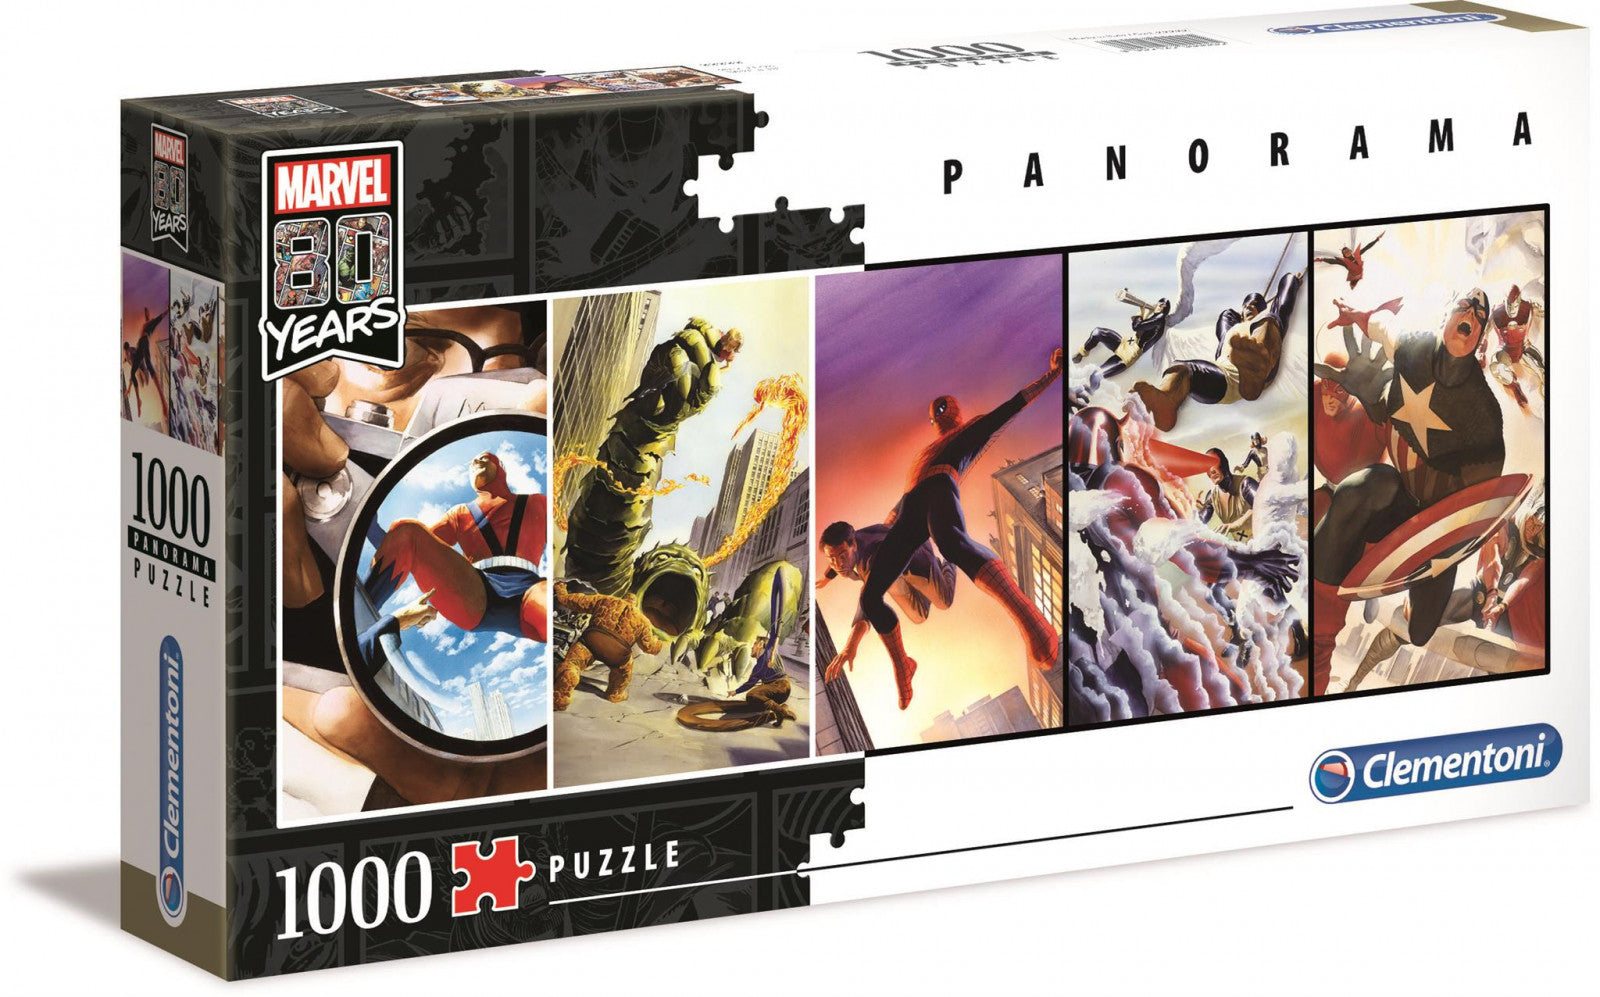 Clementoni Puzzle Marvel 80th Anniversary Panorama Puzzle 1,000 pieces